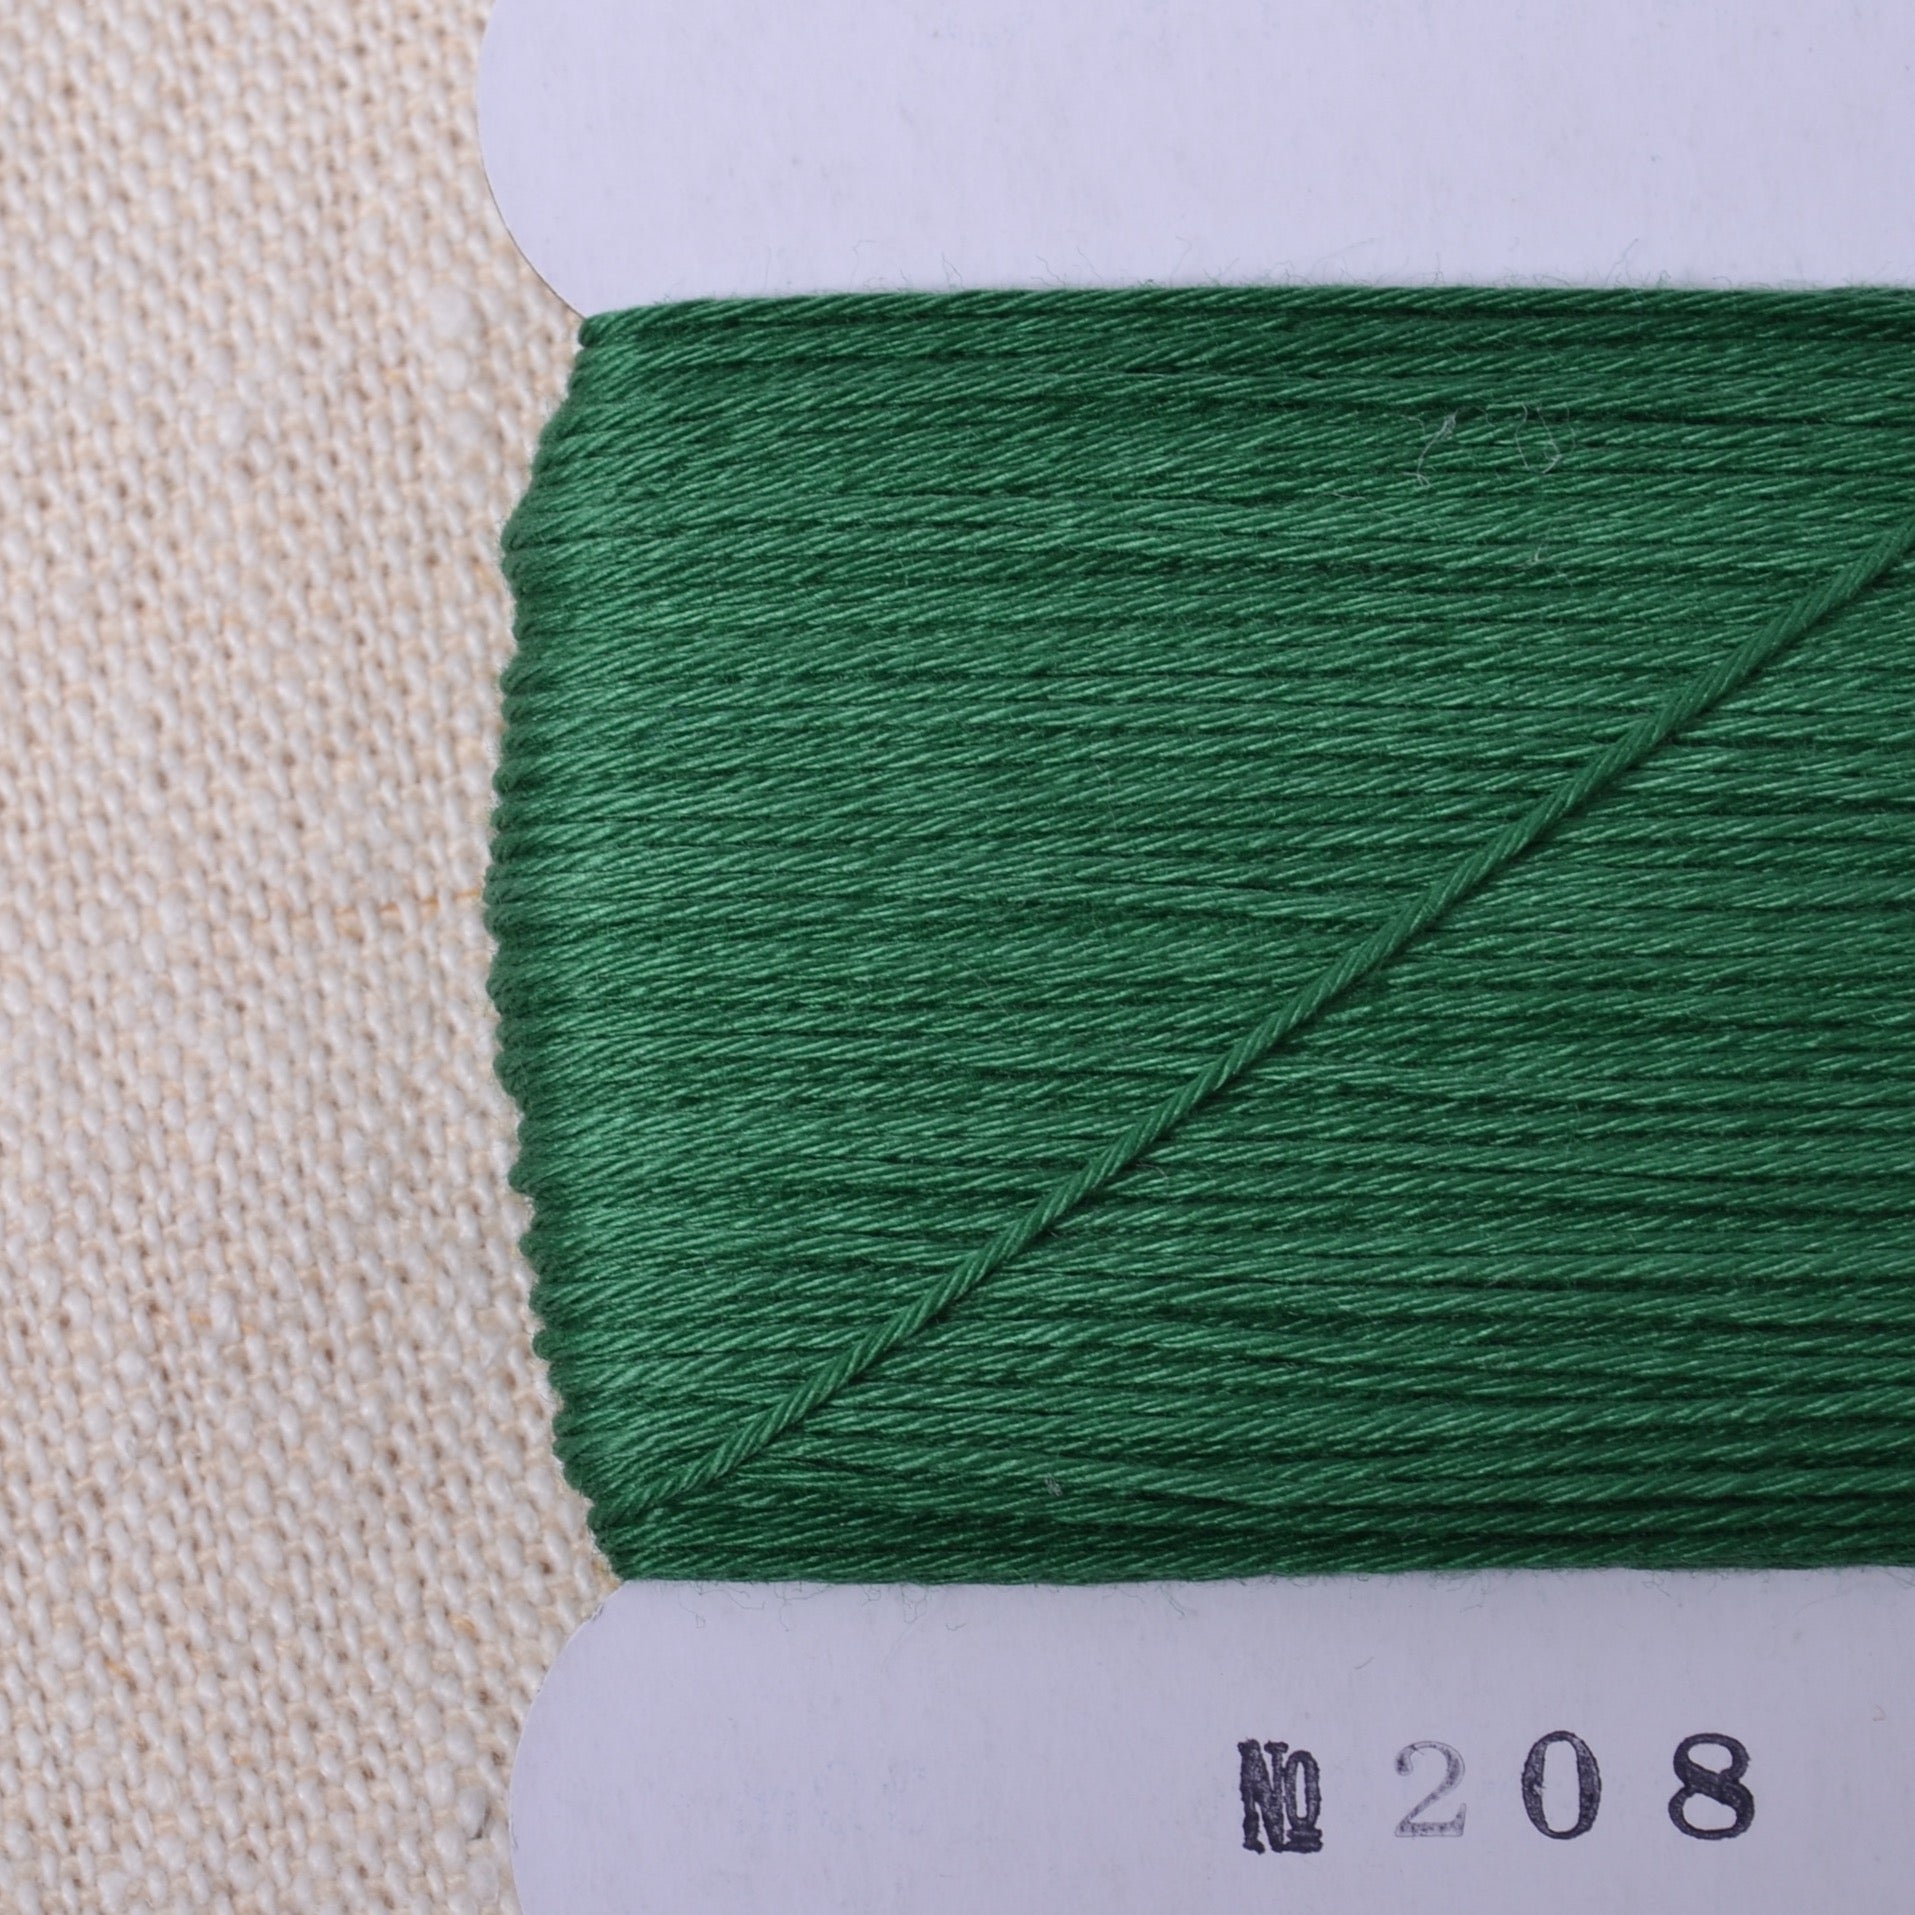 Daruma thread, for sashiko stitching